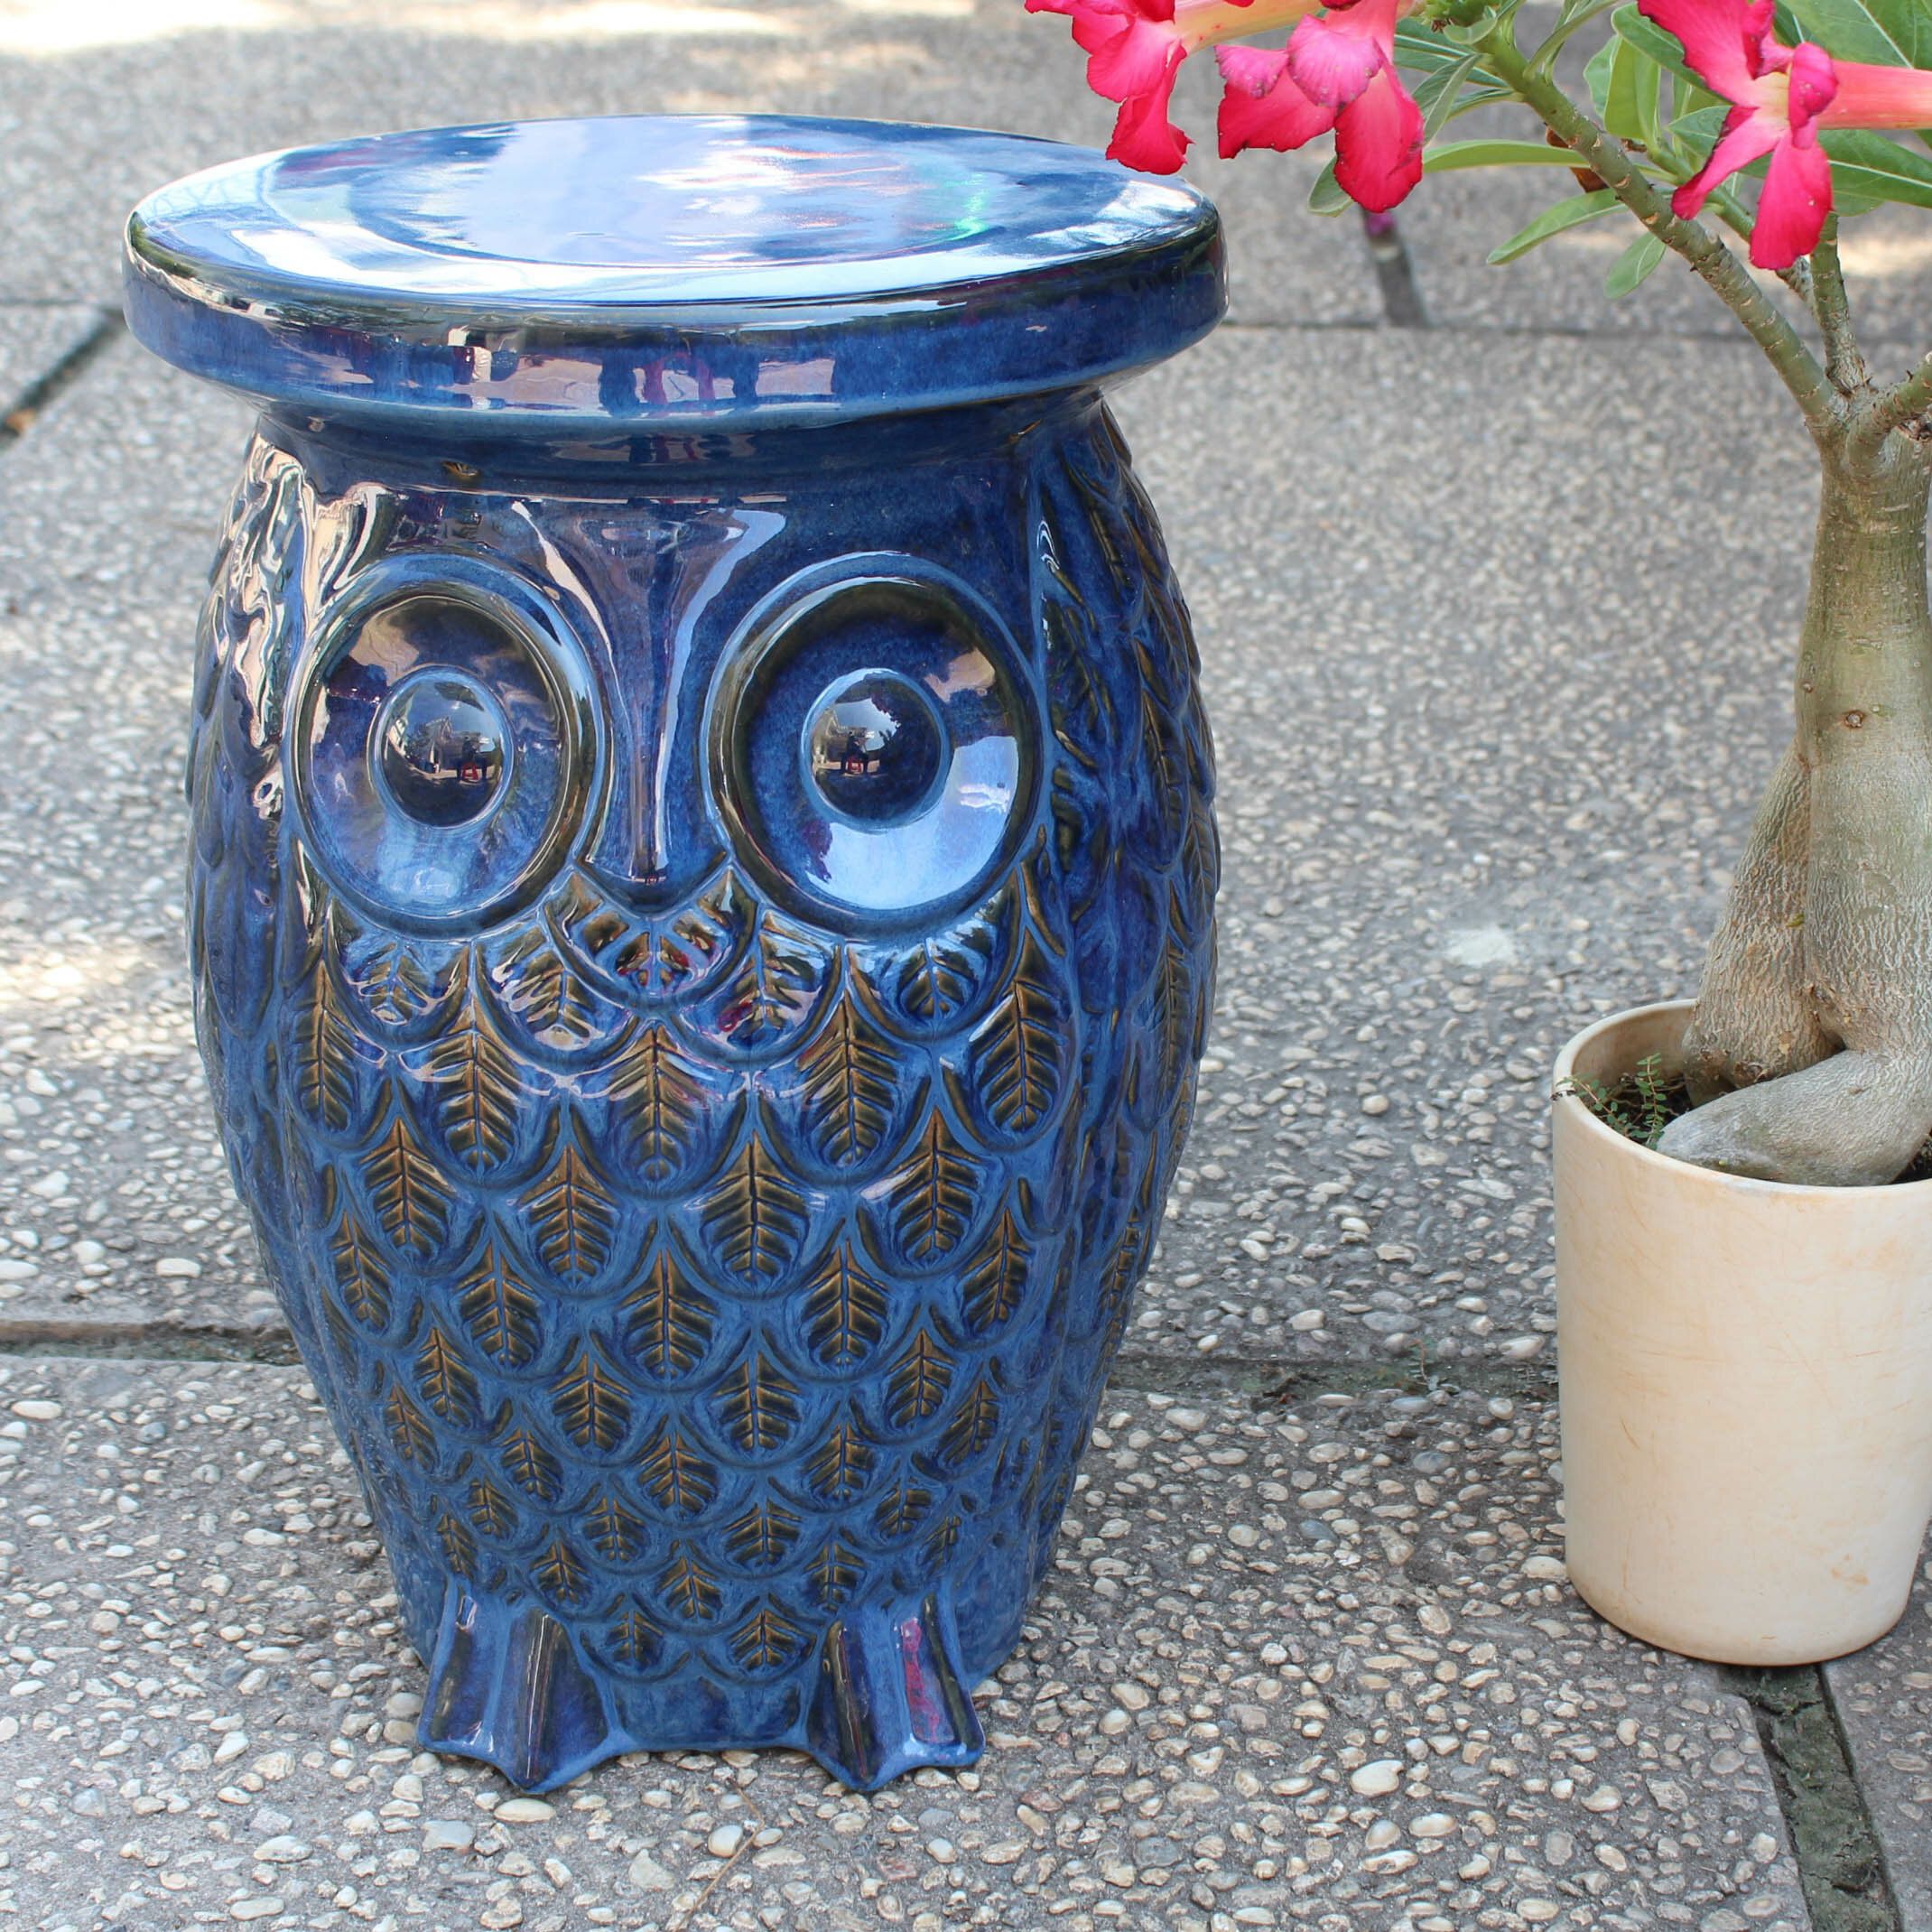 Makhzane Owl Ceramic Garden Stool Regarding Oakside Ceramic Garden Stools (View 15 of 25)